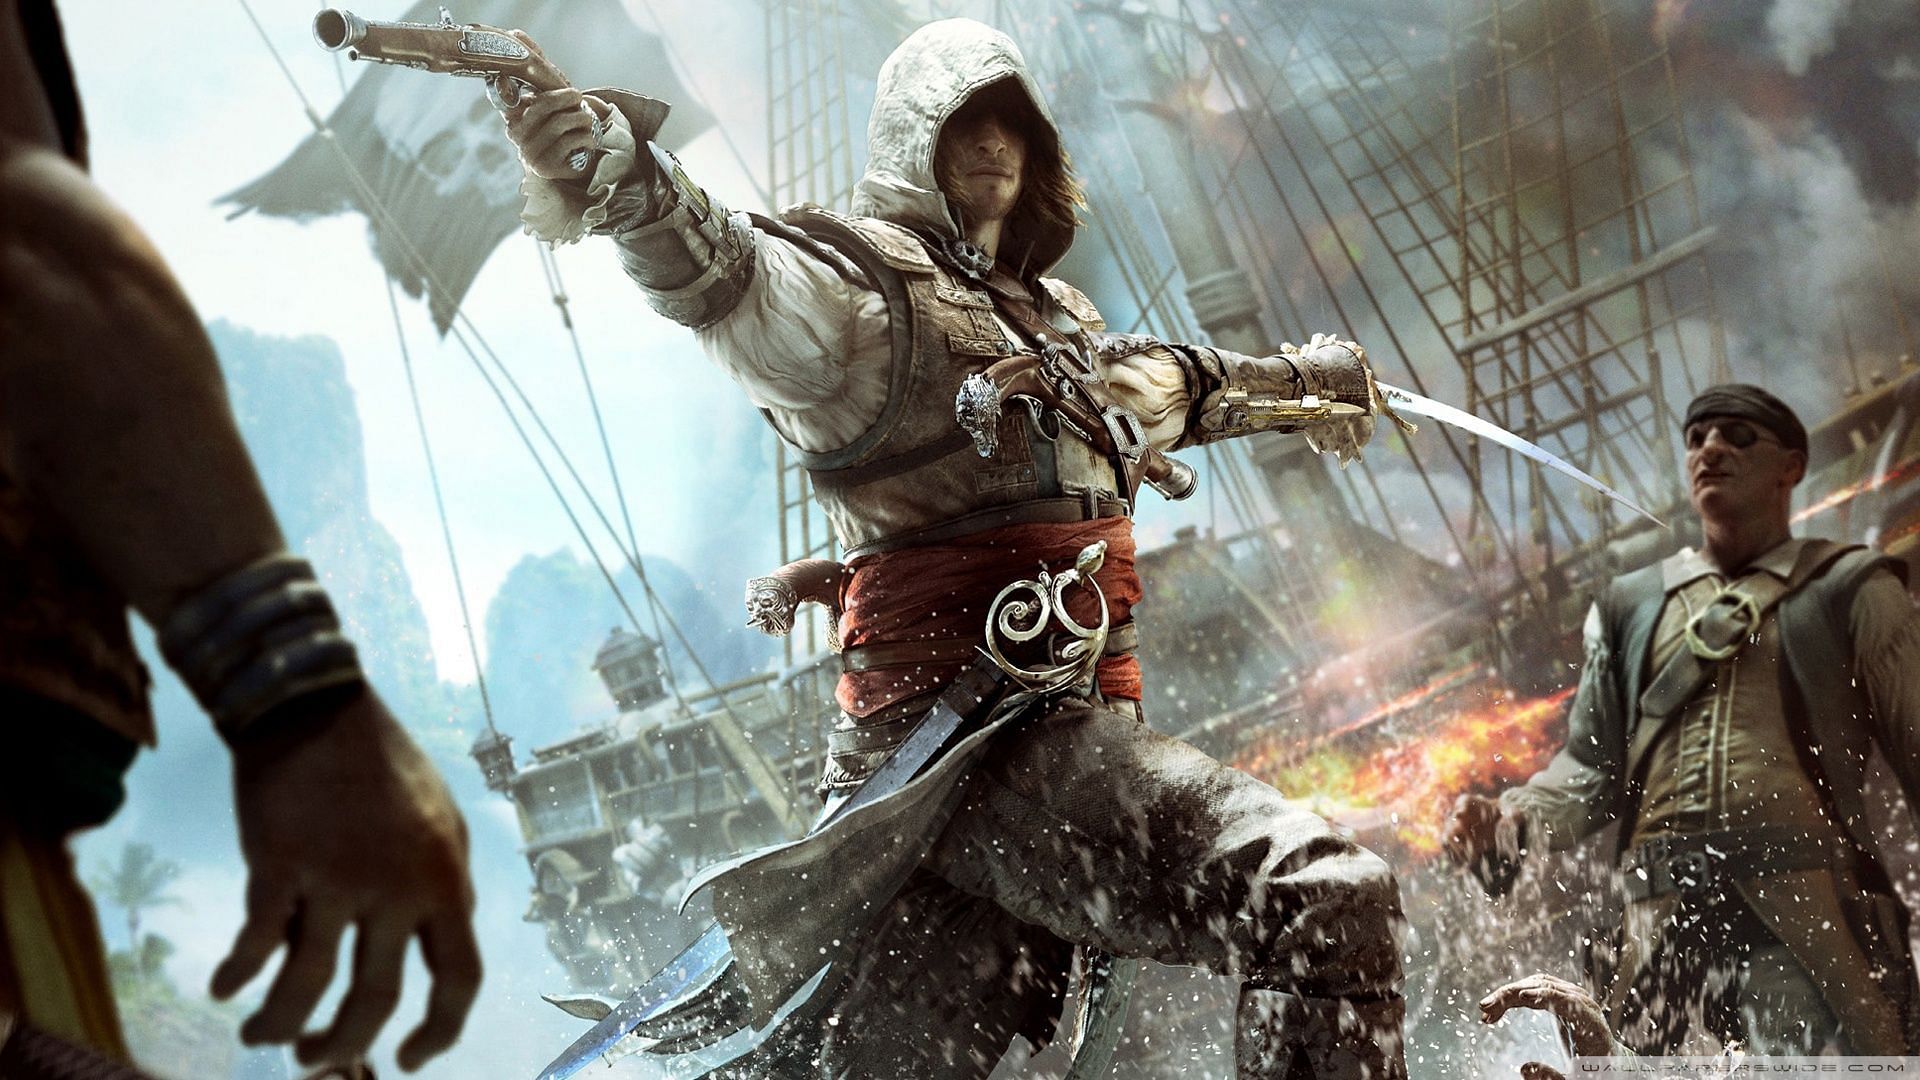 Deadly pirate, deadlier Assassin. (Image via Ubisoft)